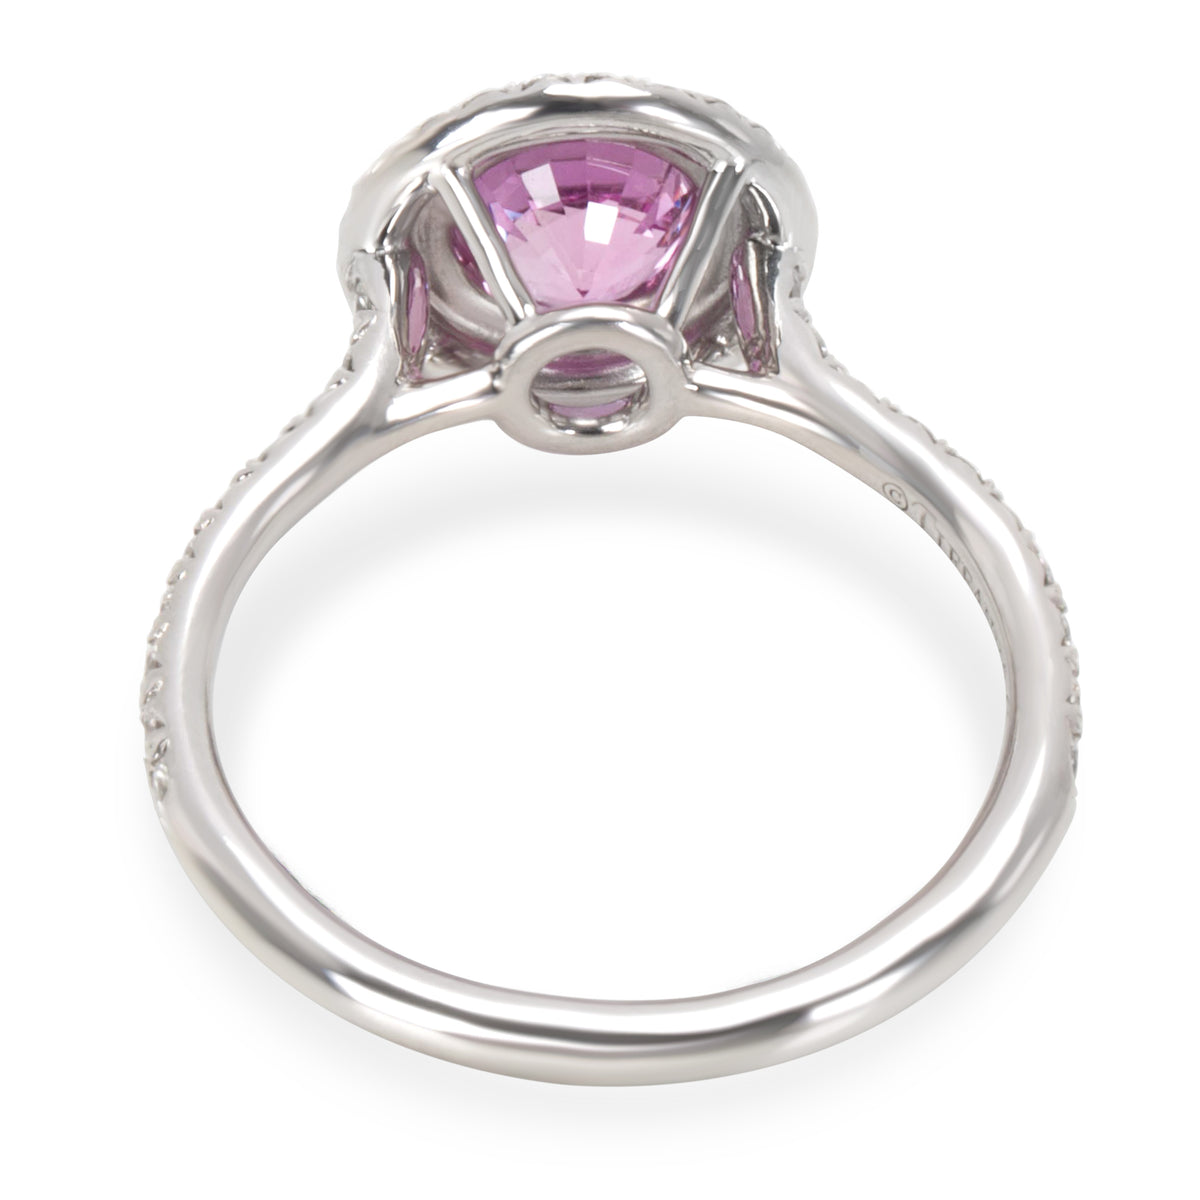 Tiffany & Co. Soleste Pink Sapphire & Diamond Ring in Platinum